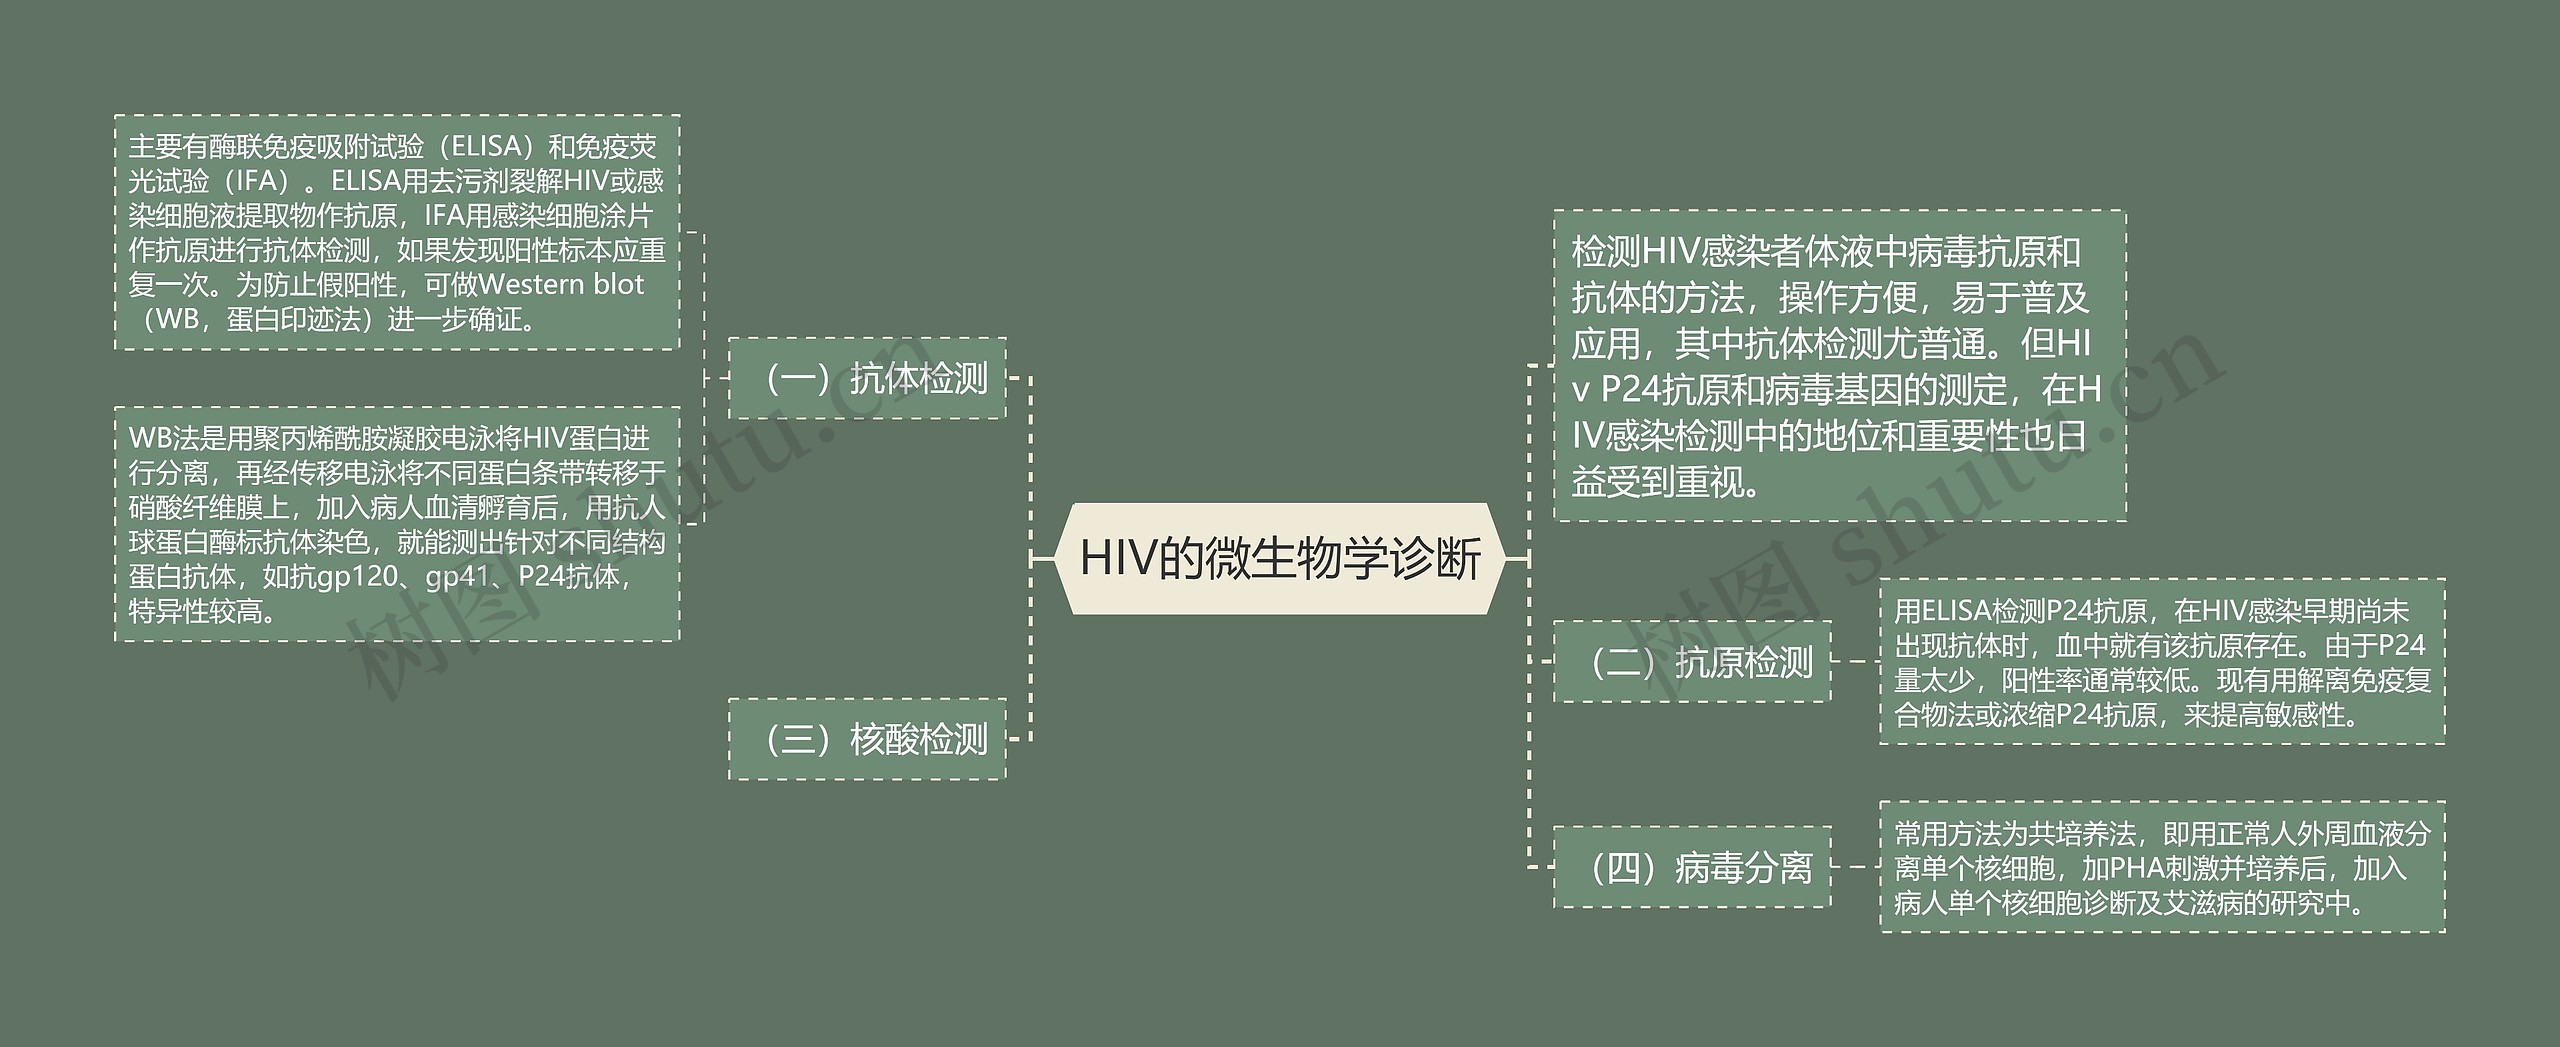 HIV的微生物学诊断思维导图